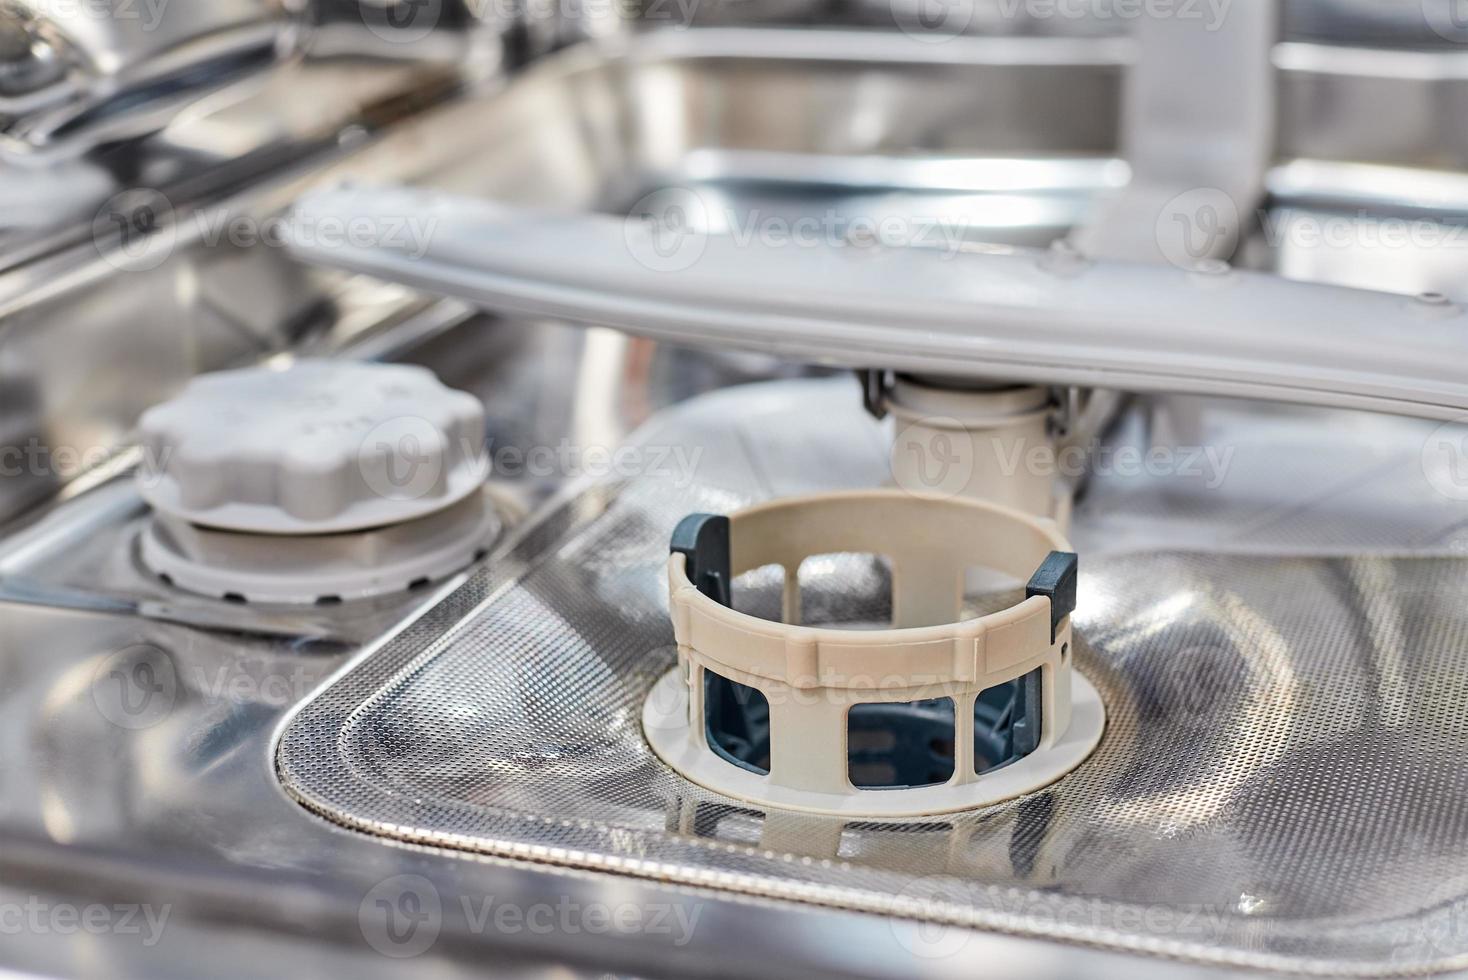 a dishwasher machine filter close up. Domestic kitchen appliance parts photo